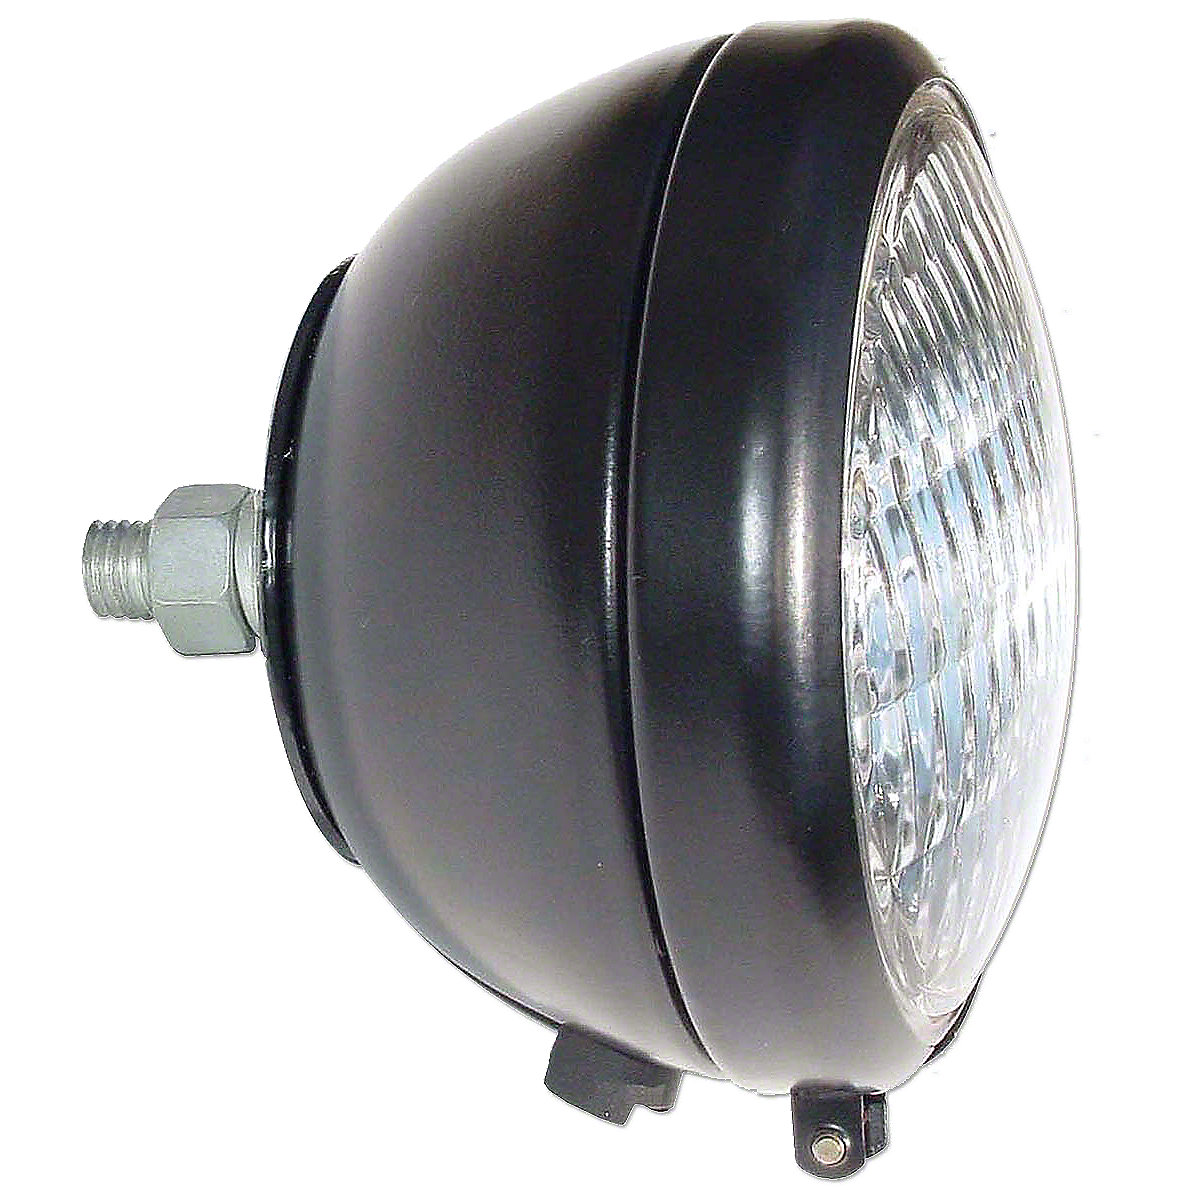 12 Volt Headlight Assembly For Allis Chalmers: 190XT, 170, 175, 180, 185, 190, 200.